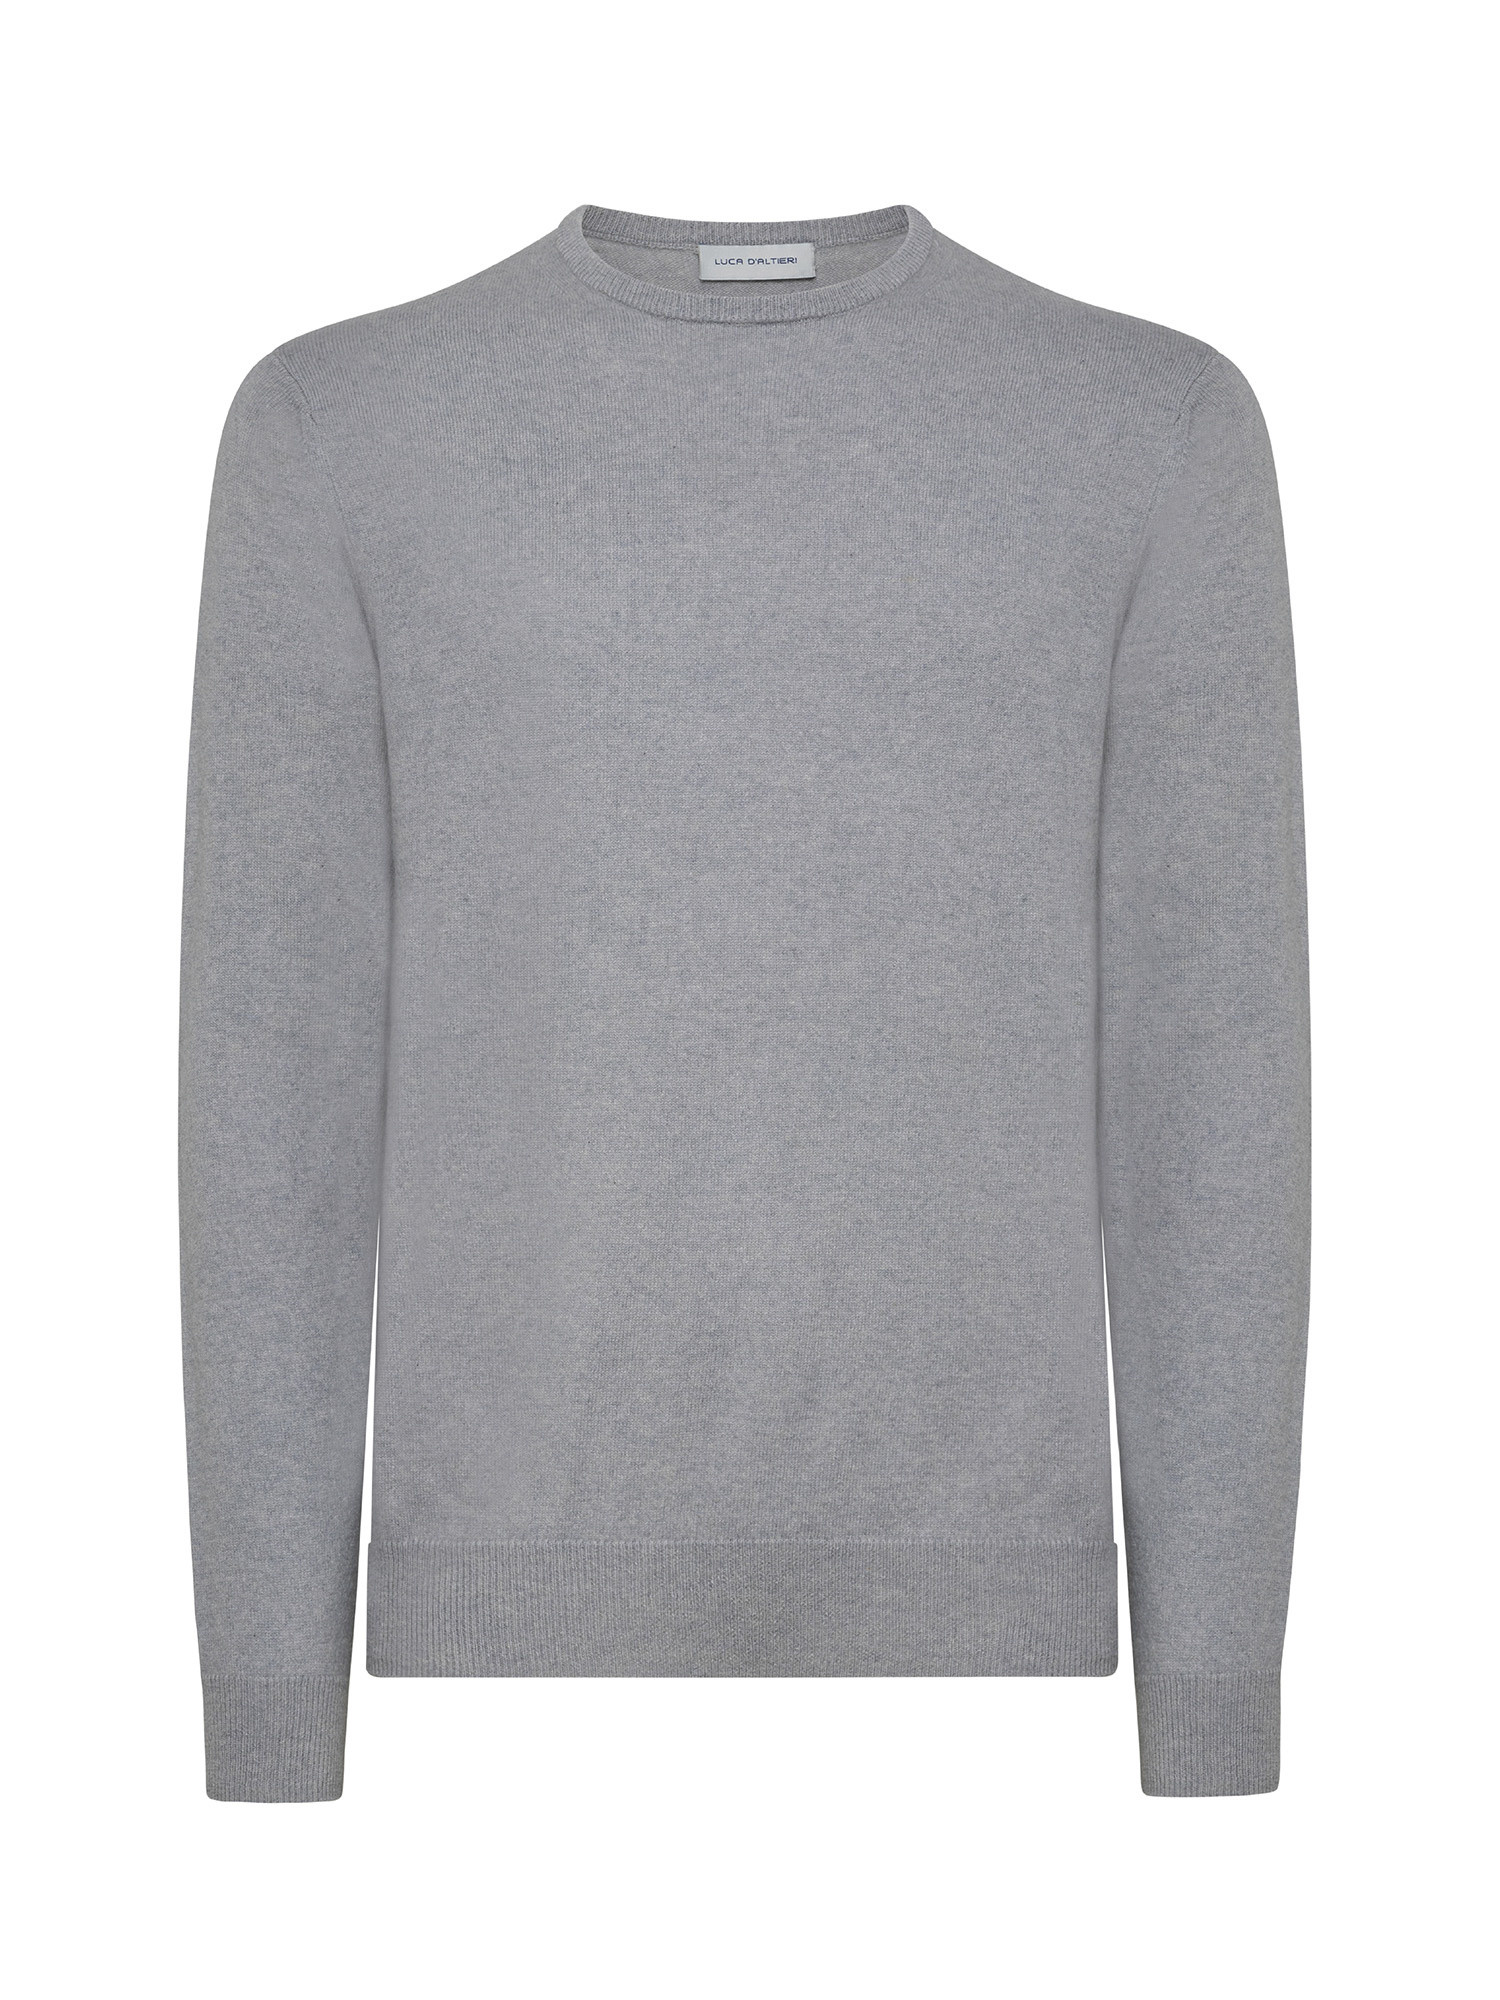 Pure cashmere crewneck pullover, Grey, large image number 0